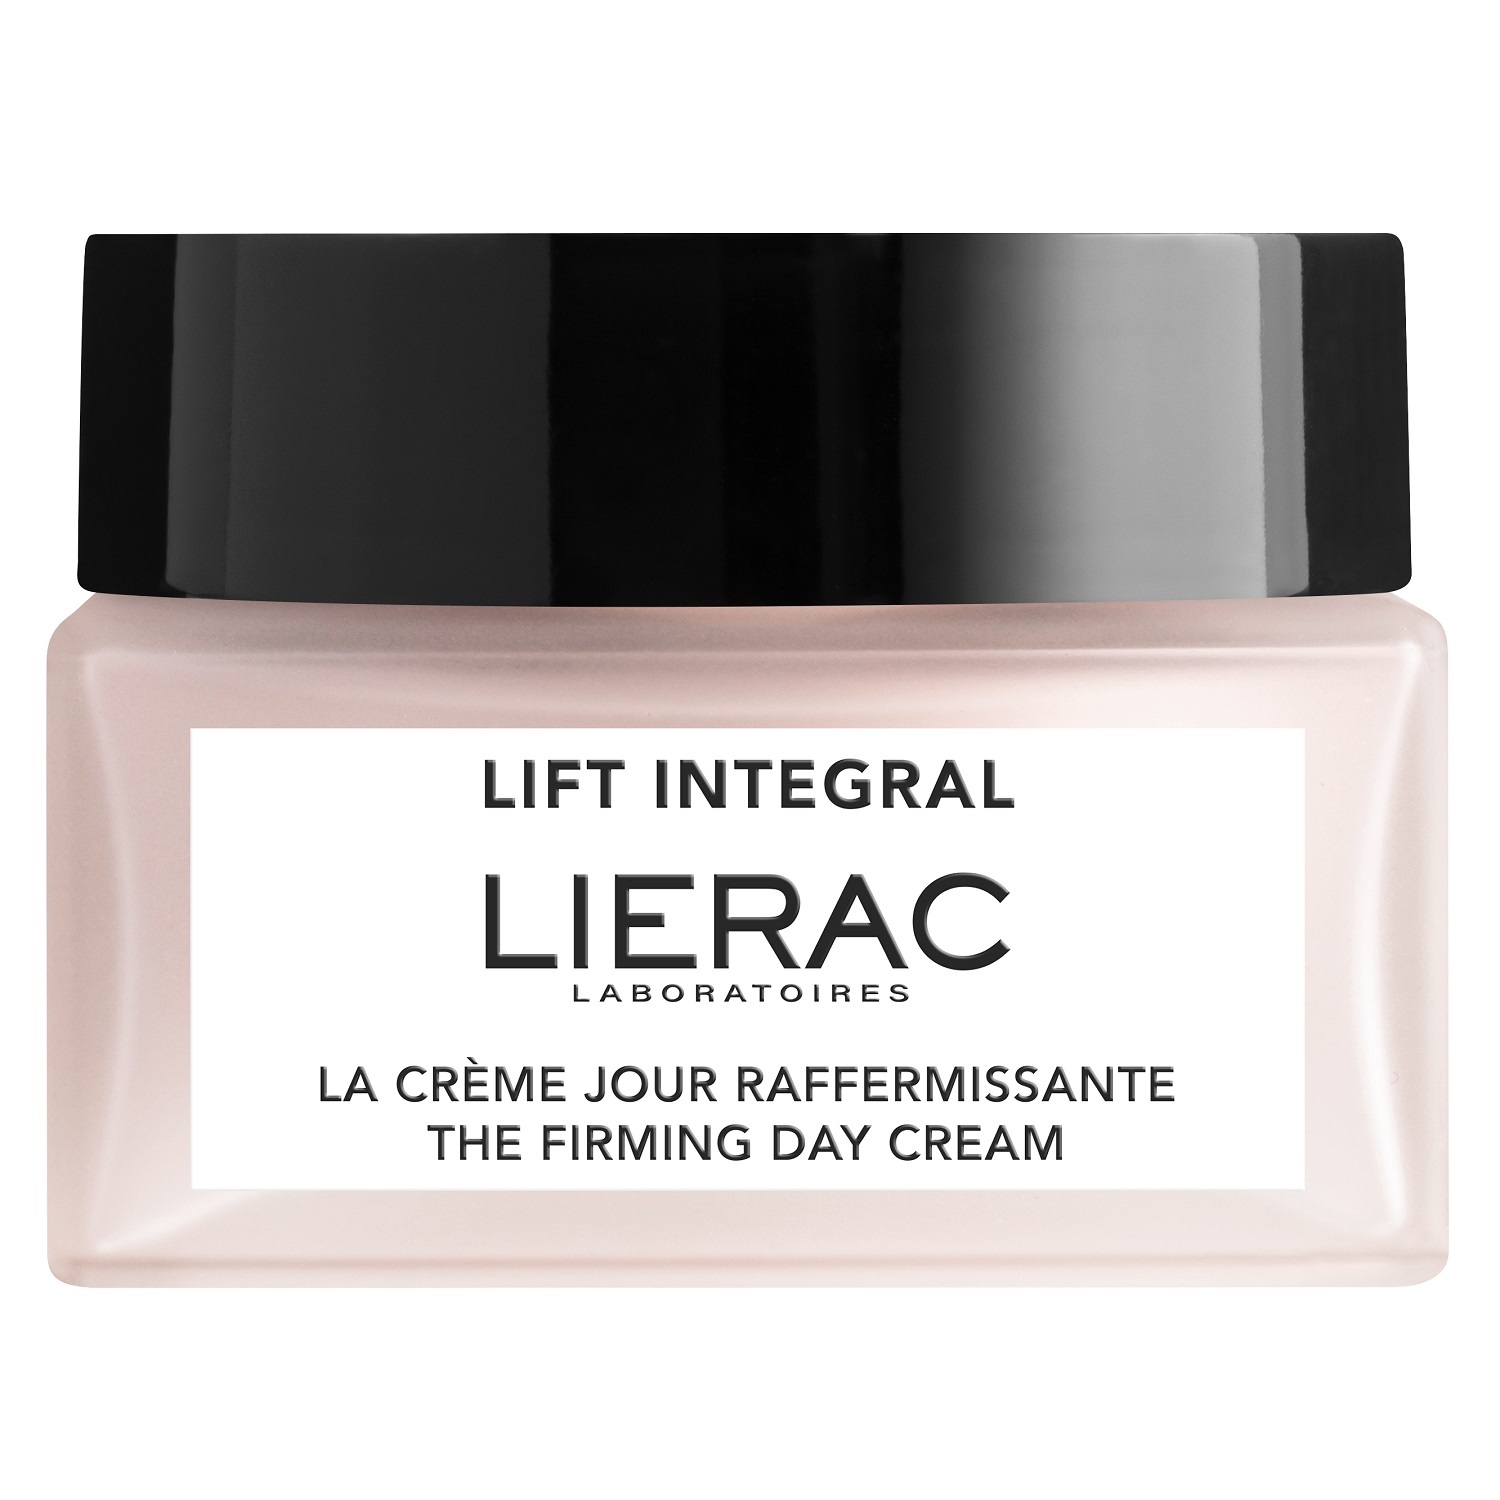 Lierac Укрепляющий дневной крем-лифтинг для лица, 50 мл (Lierac, Lift Integral) lift integral neck